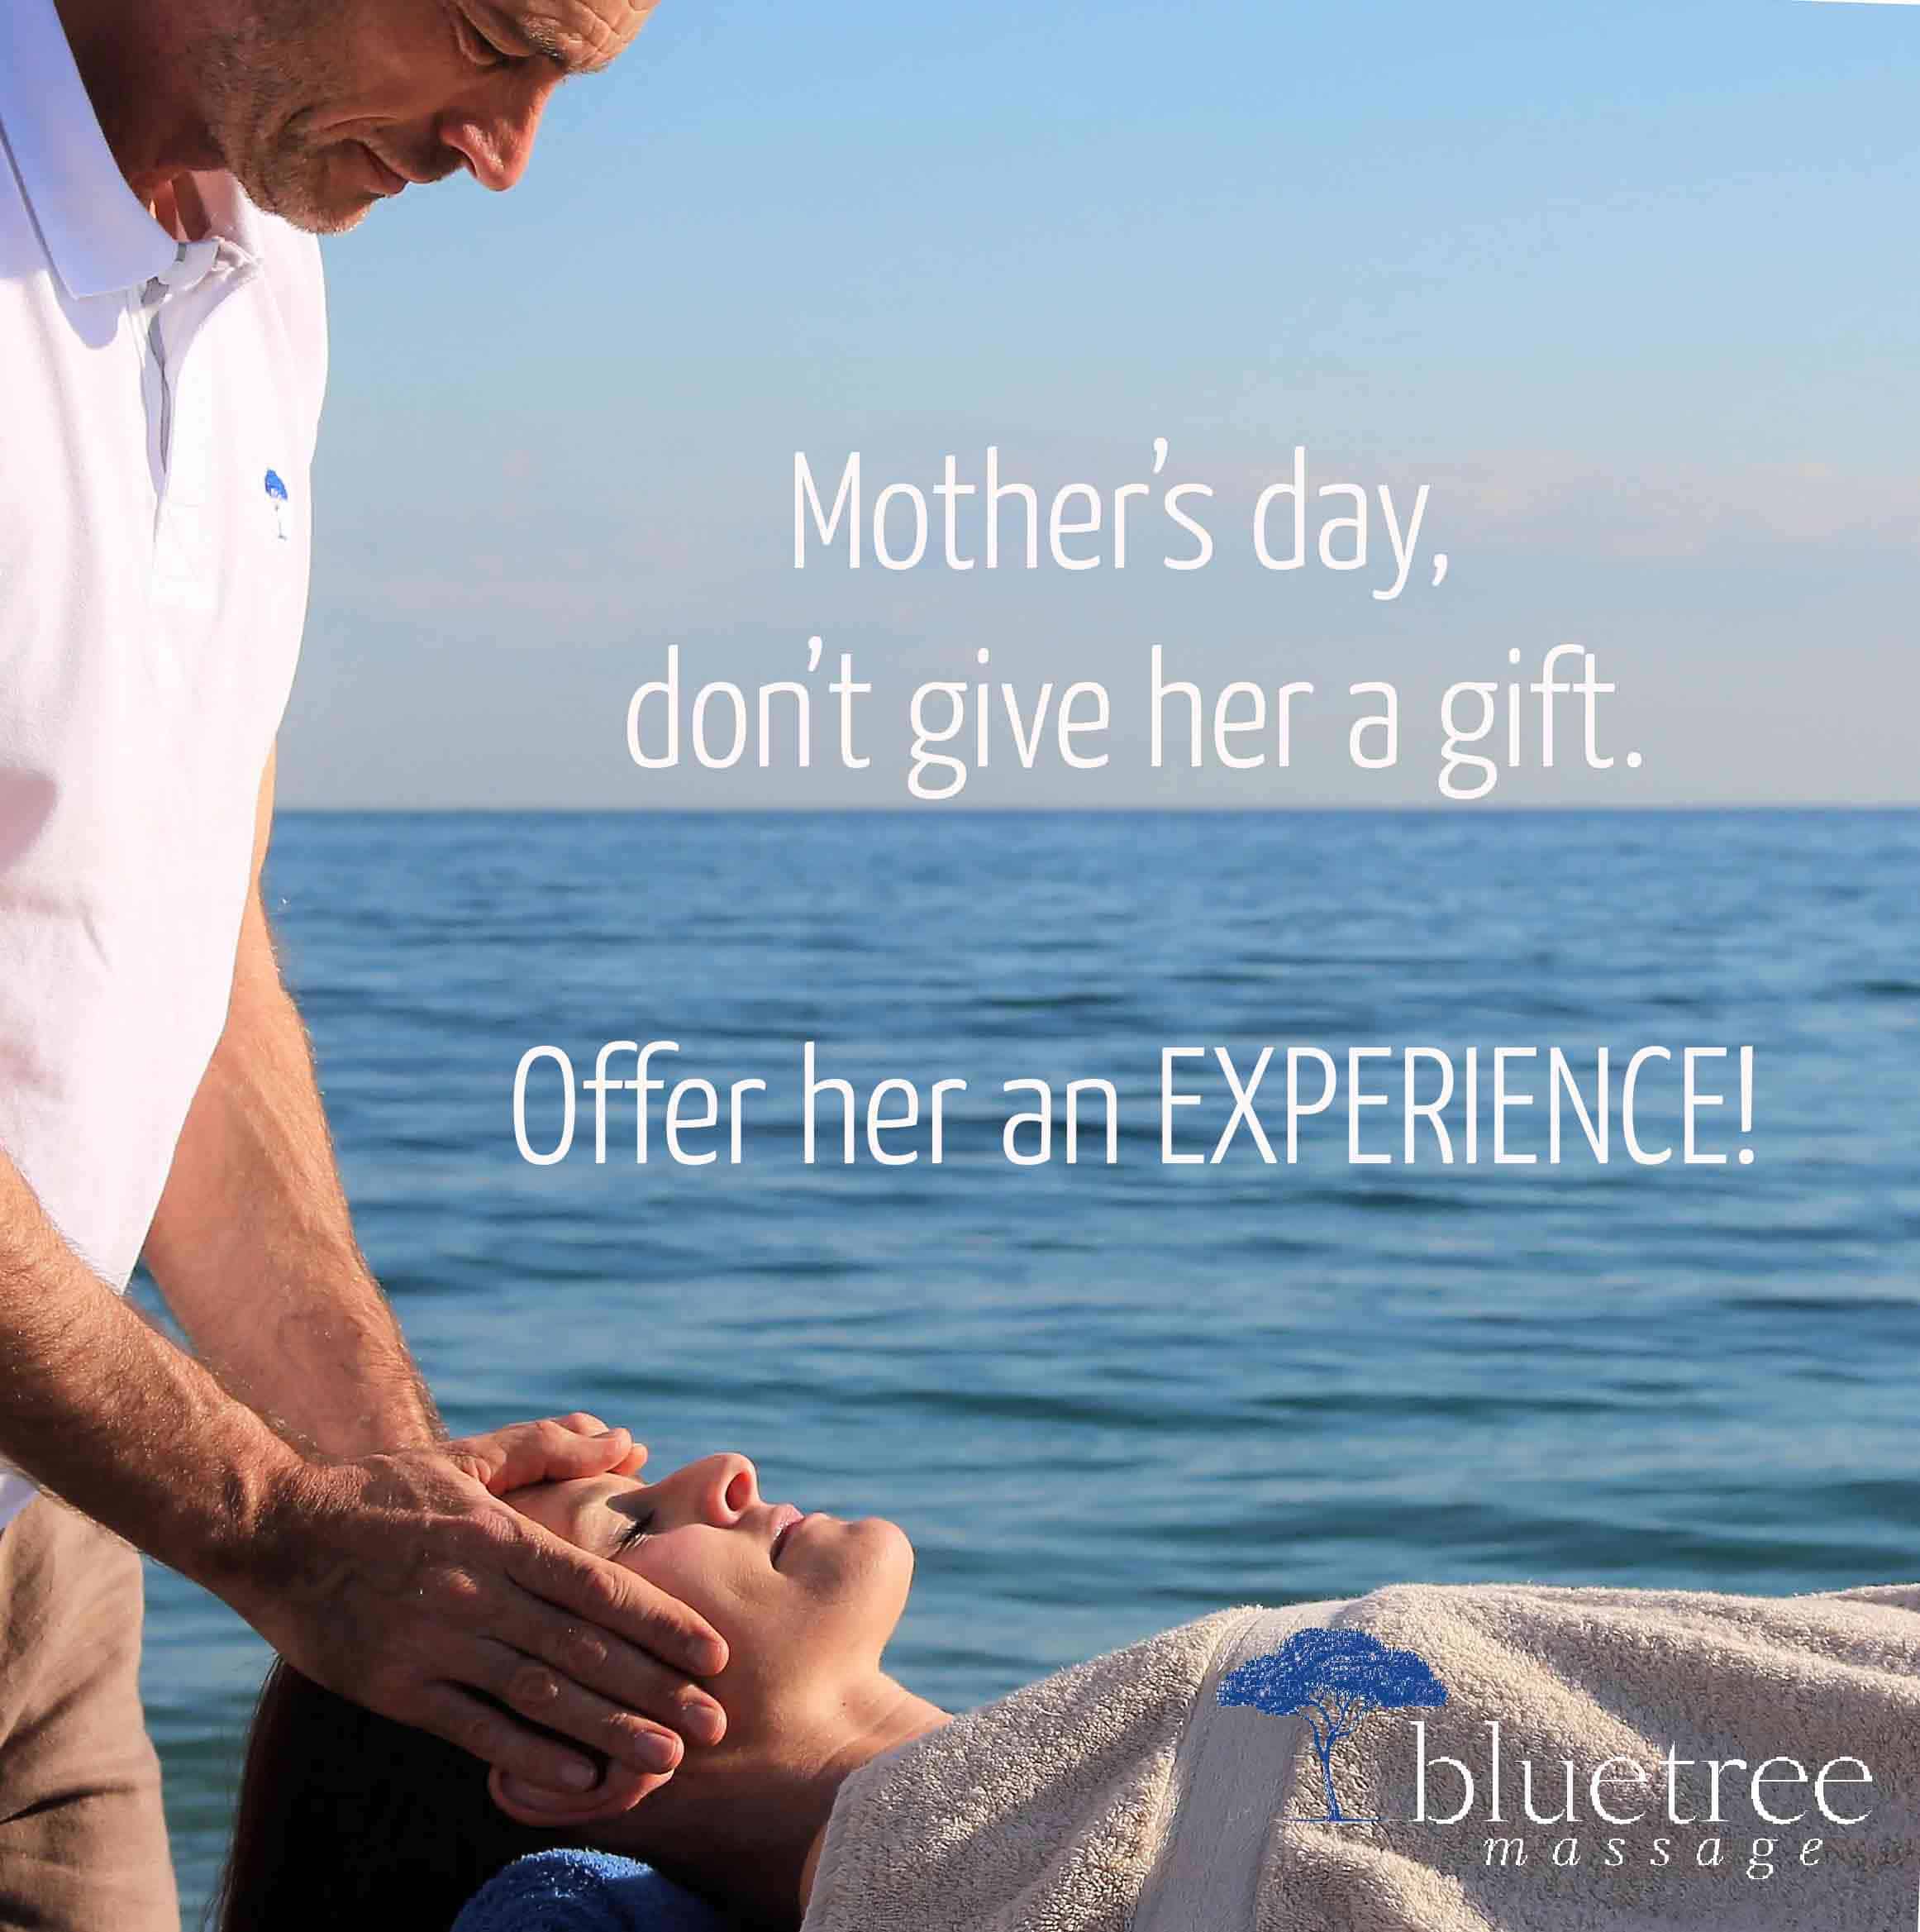 massage mother's day valbonne, antibes blue tree massage